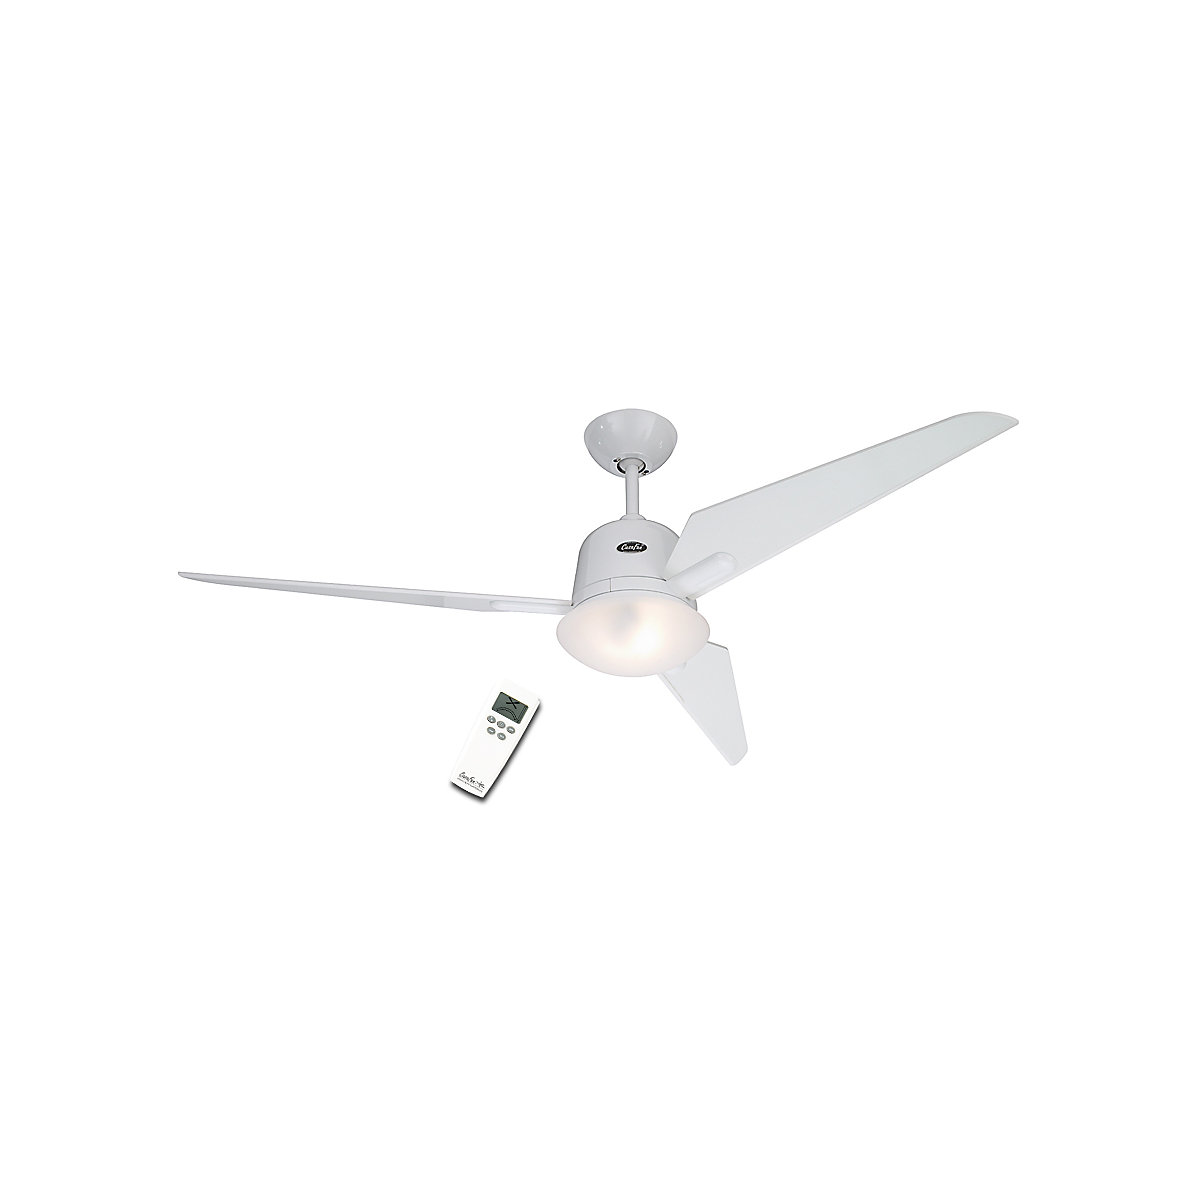 Plafondventilator ECO AVIATOS, propellerblad-Ø 1320 mm, glanzend wit gelakt / wit gelakt